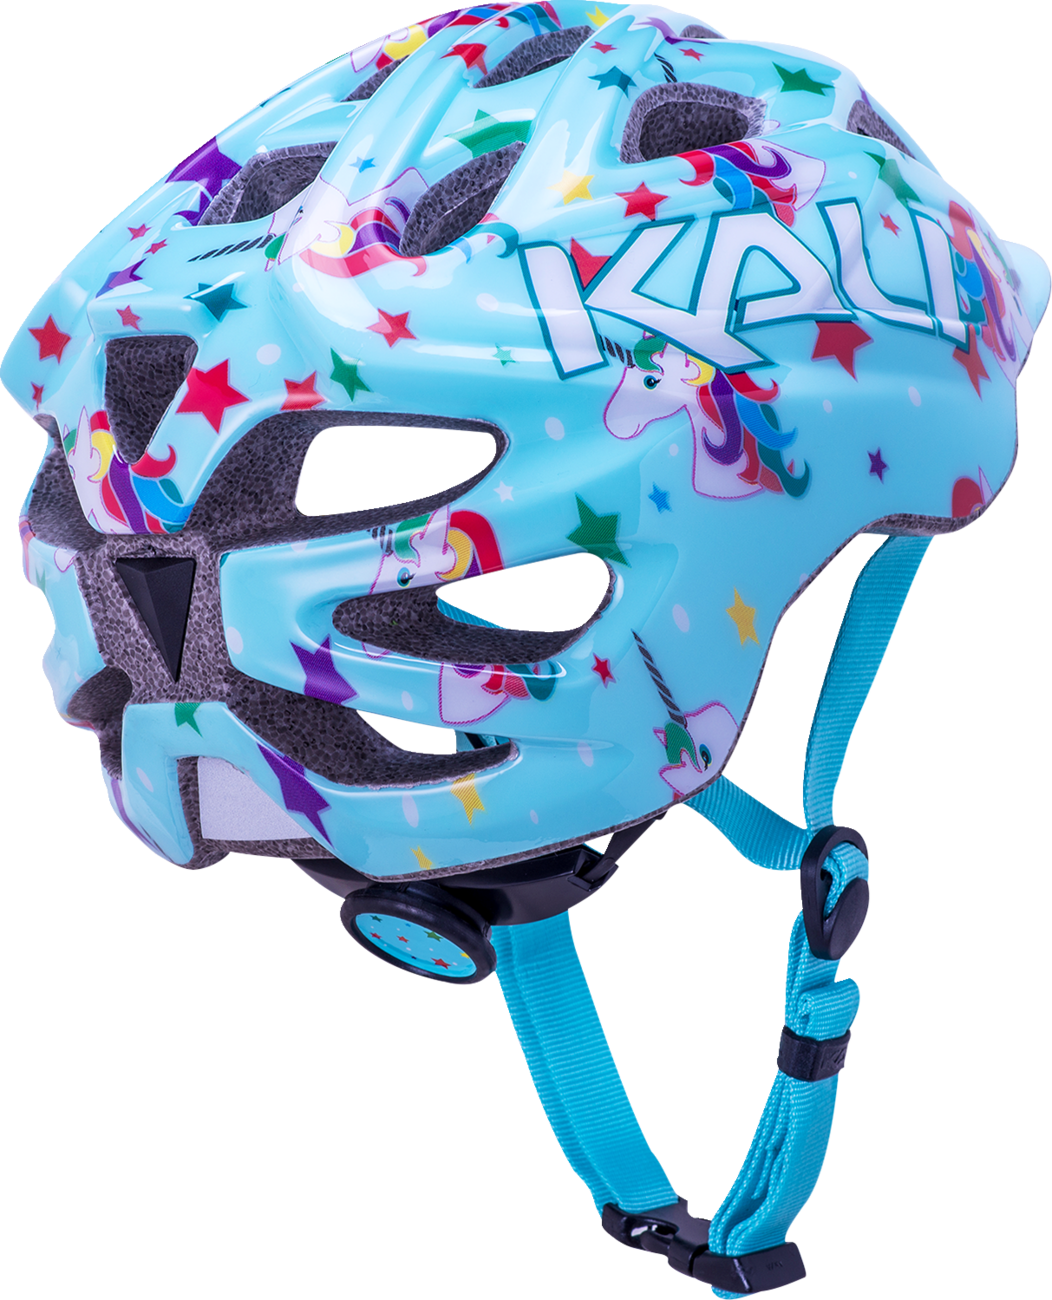 KALI Child Chakra Helmet - Unicorn - Blue - Small 0221020315